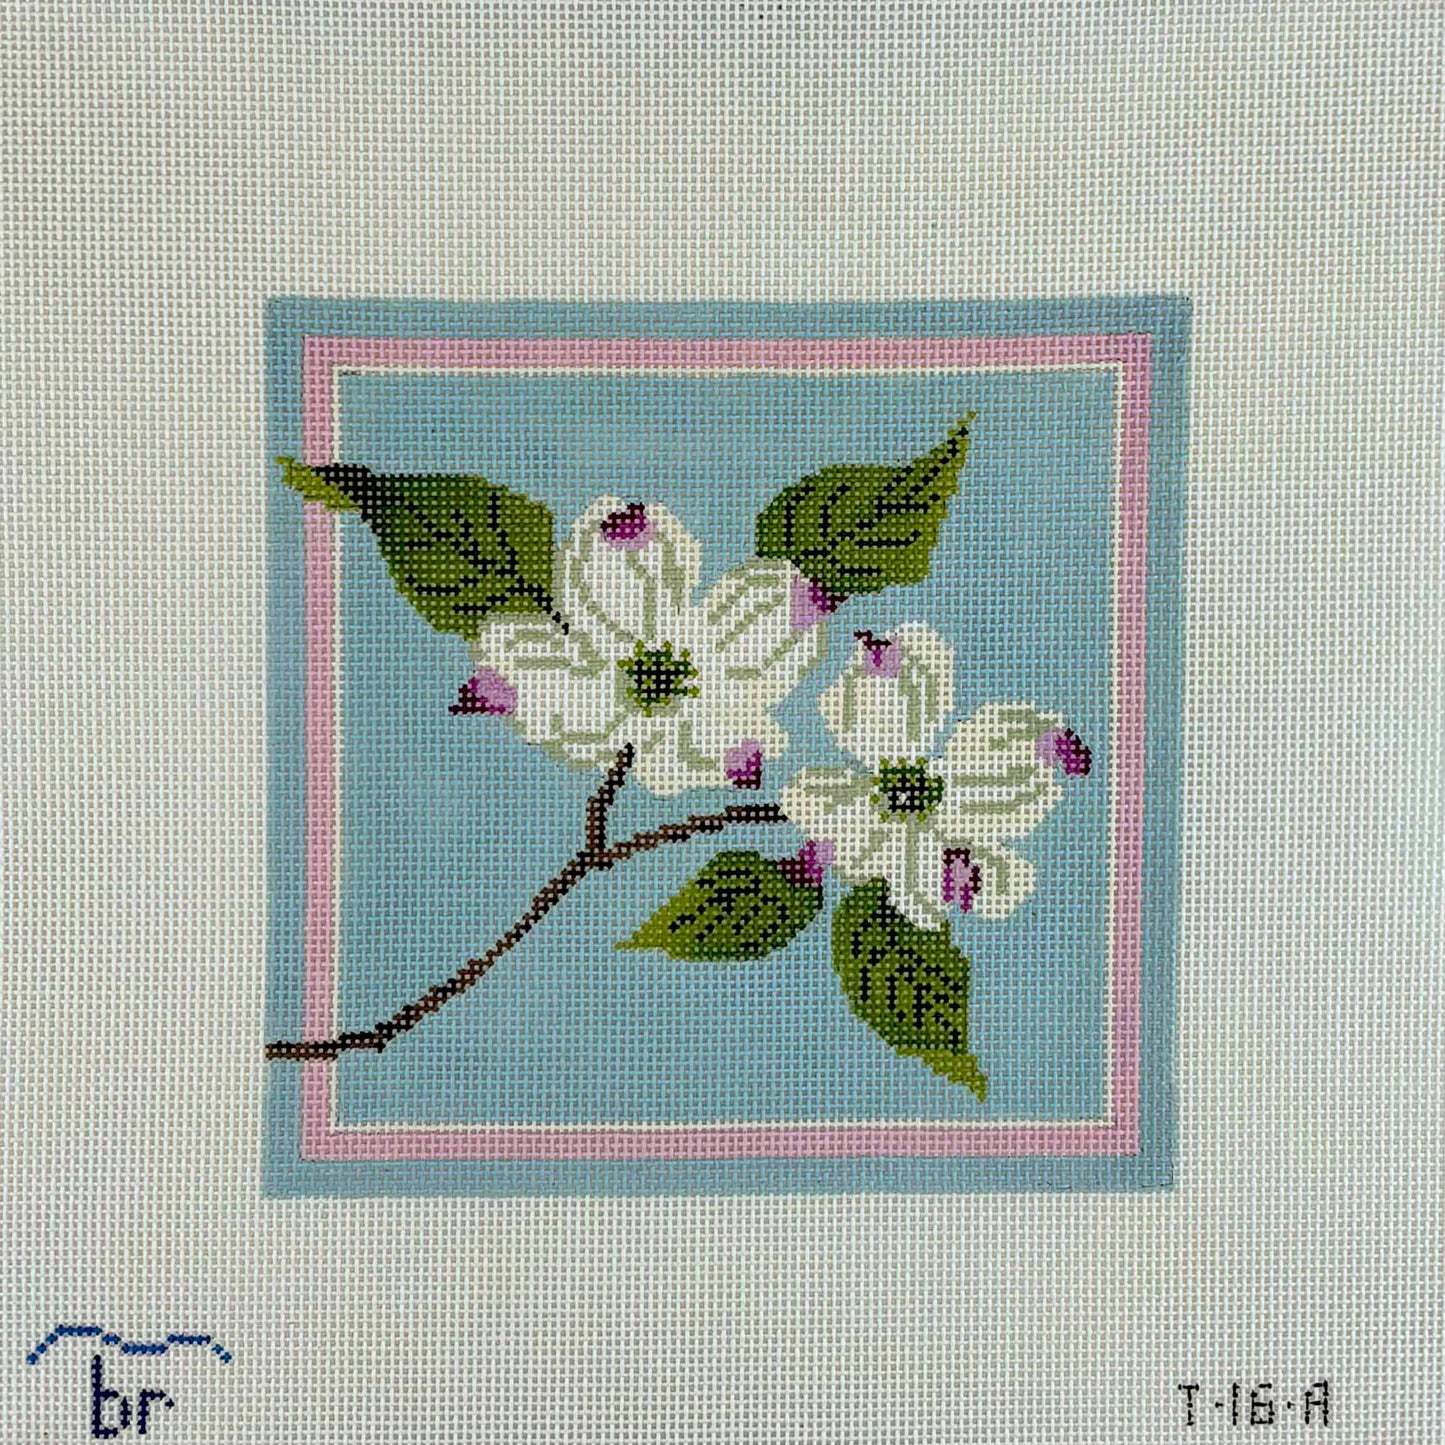 White Dogwood Blossom - 13 mesh